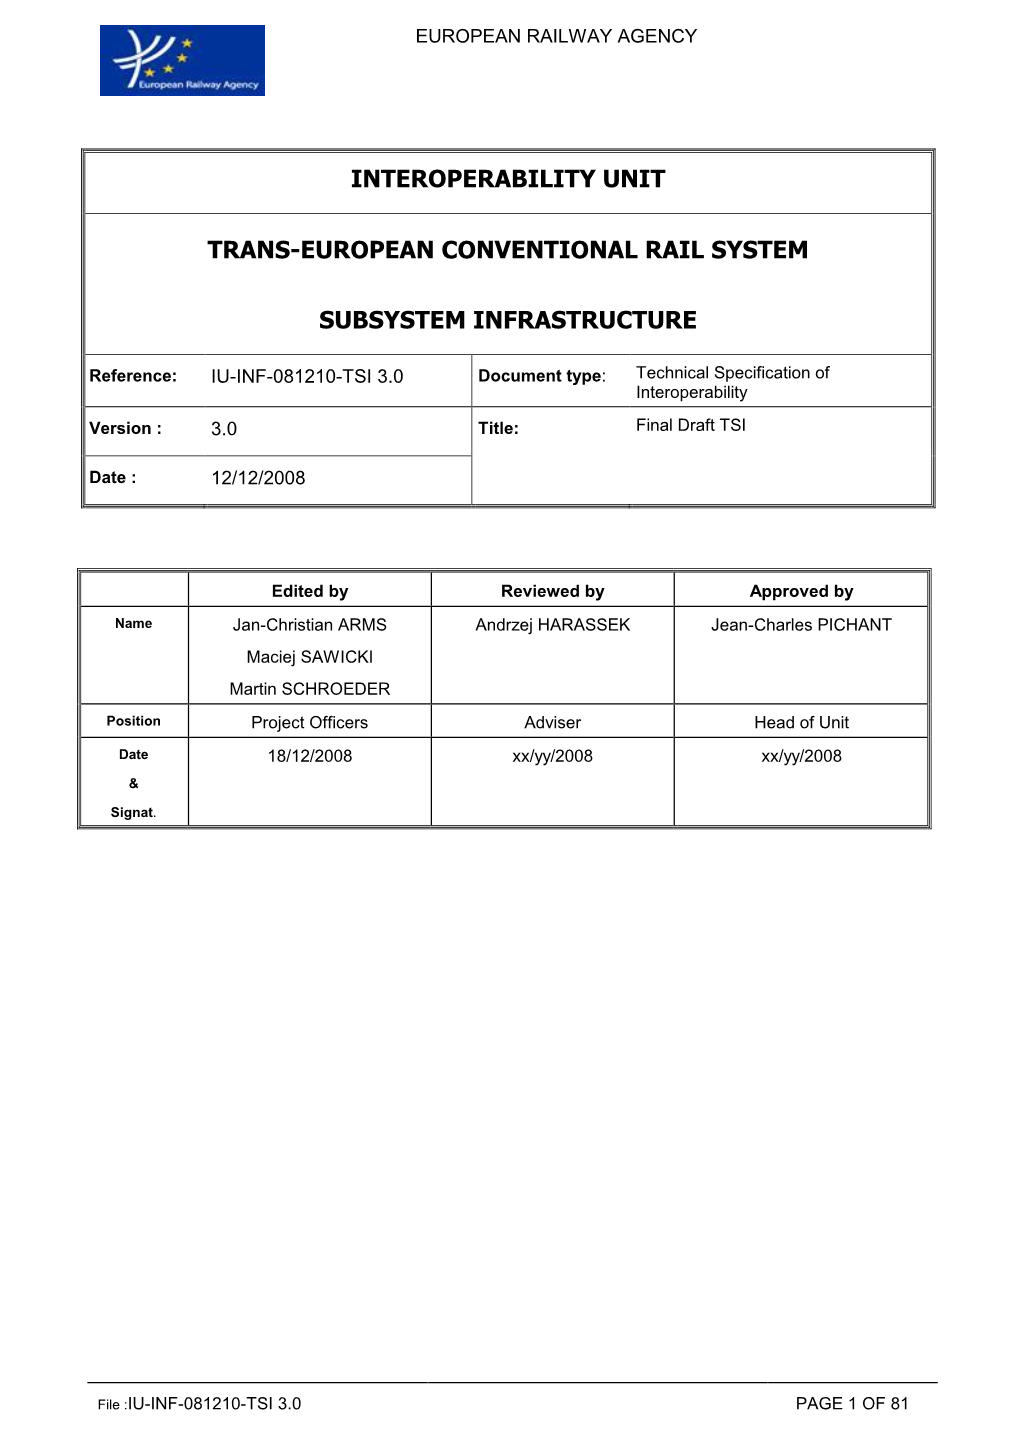 Interoperability Unit Trans-European Conventional Rail System Subsystem